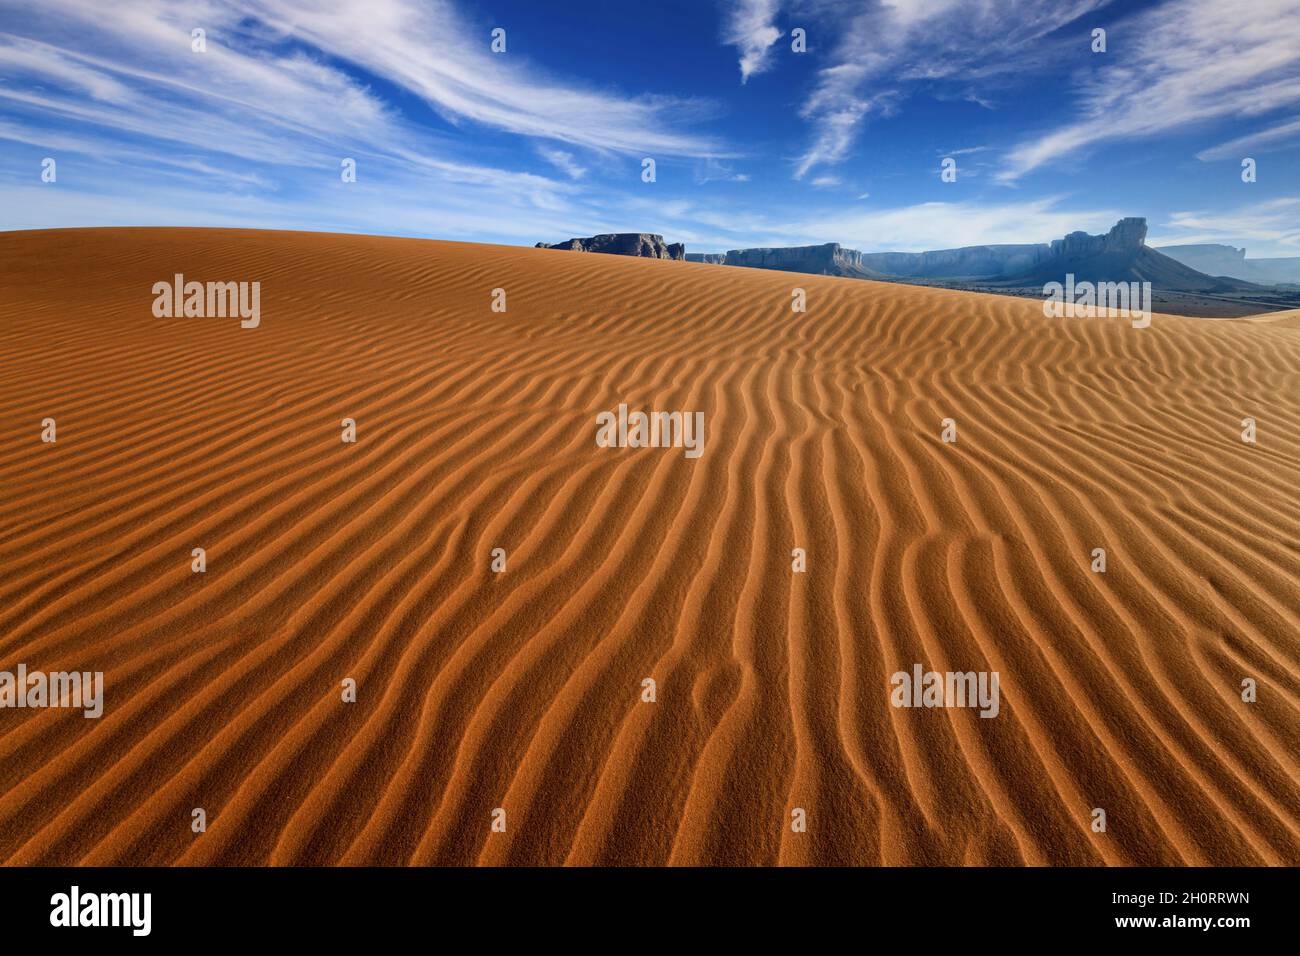 Close-up of ripples on sand dunes in the desert, Saudi Arabia Stock Photo